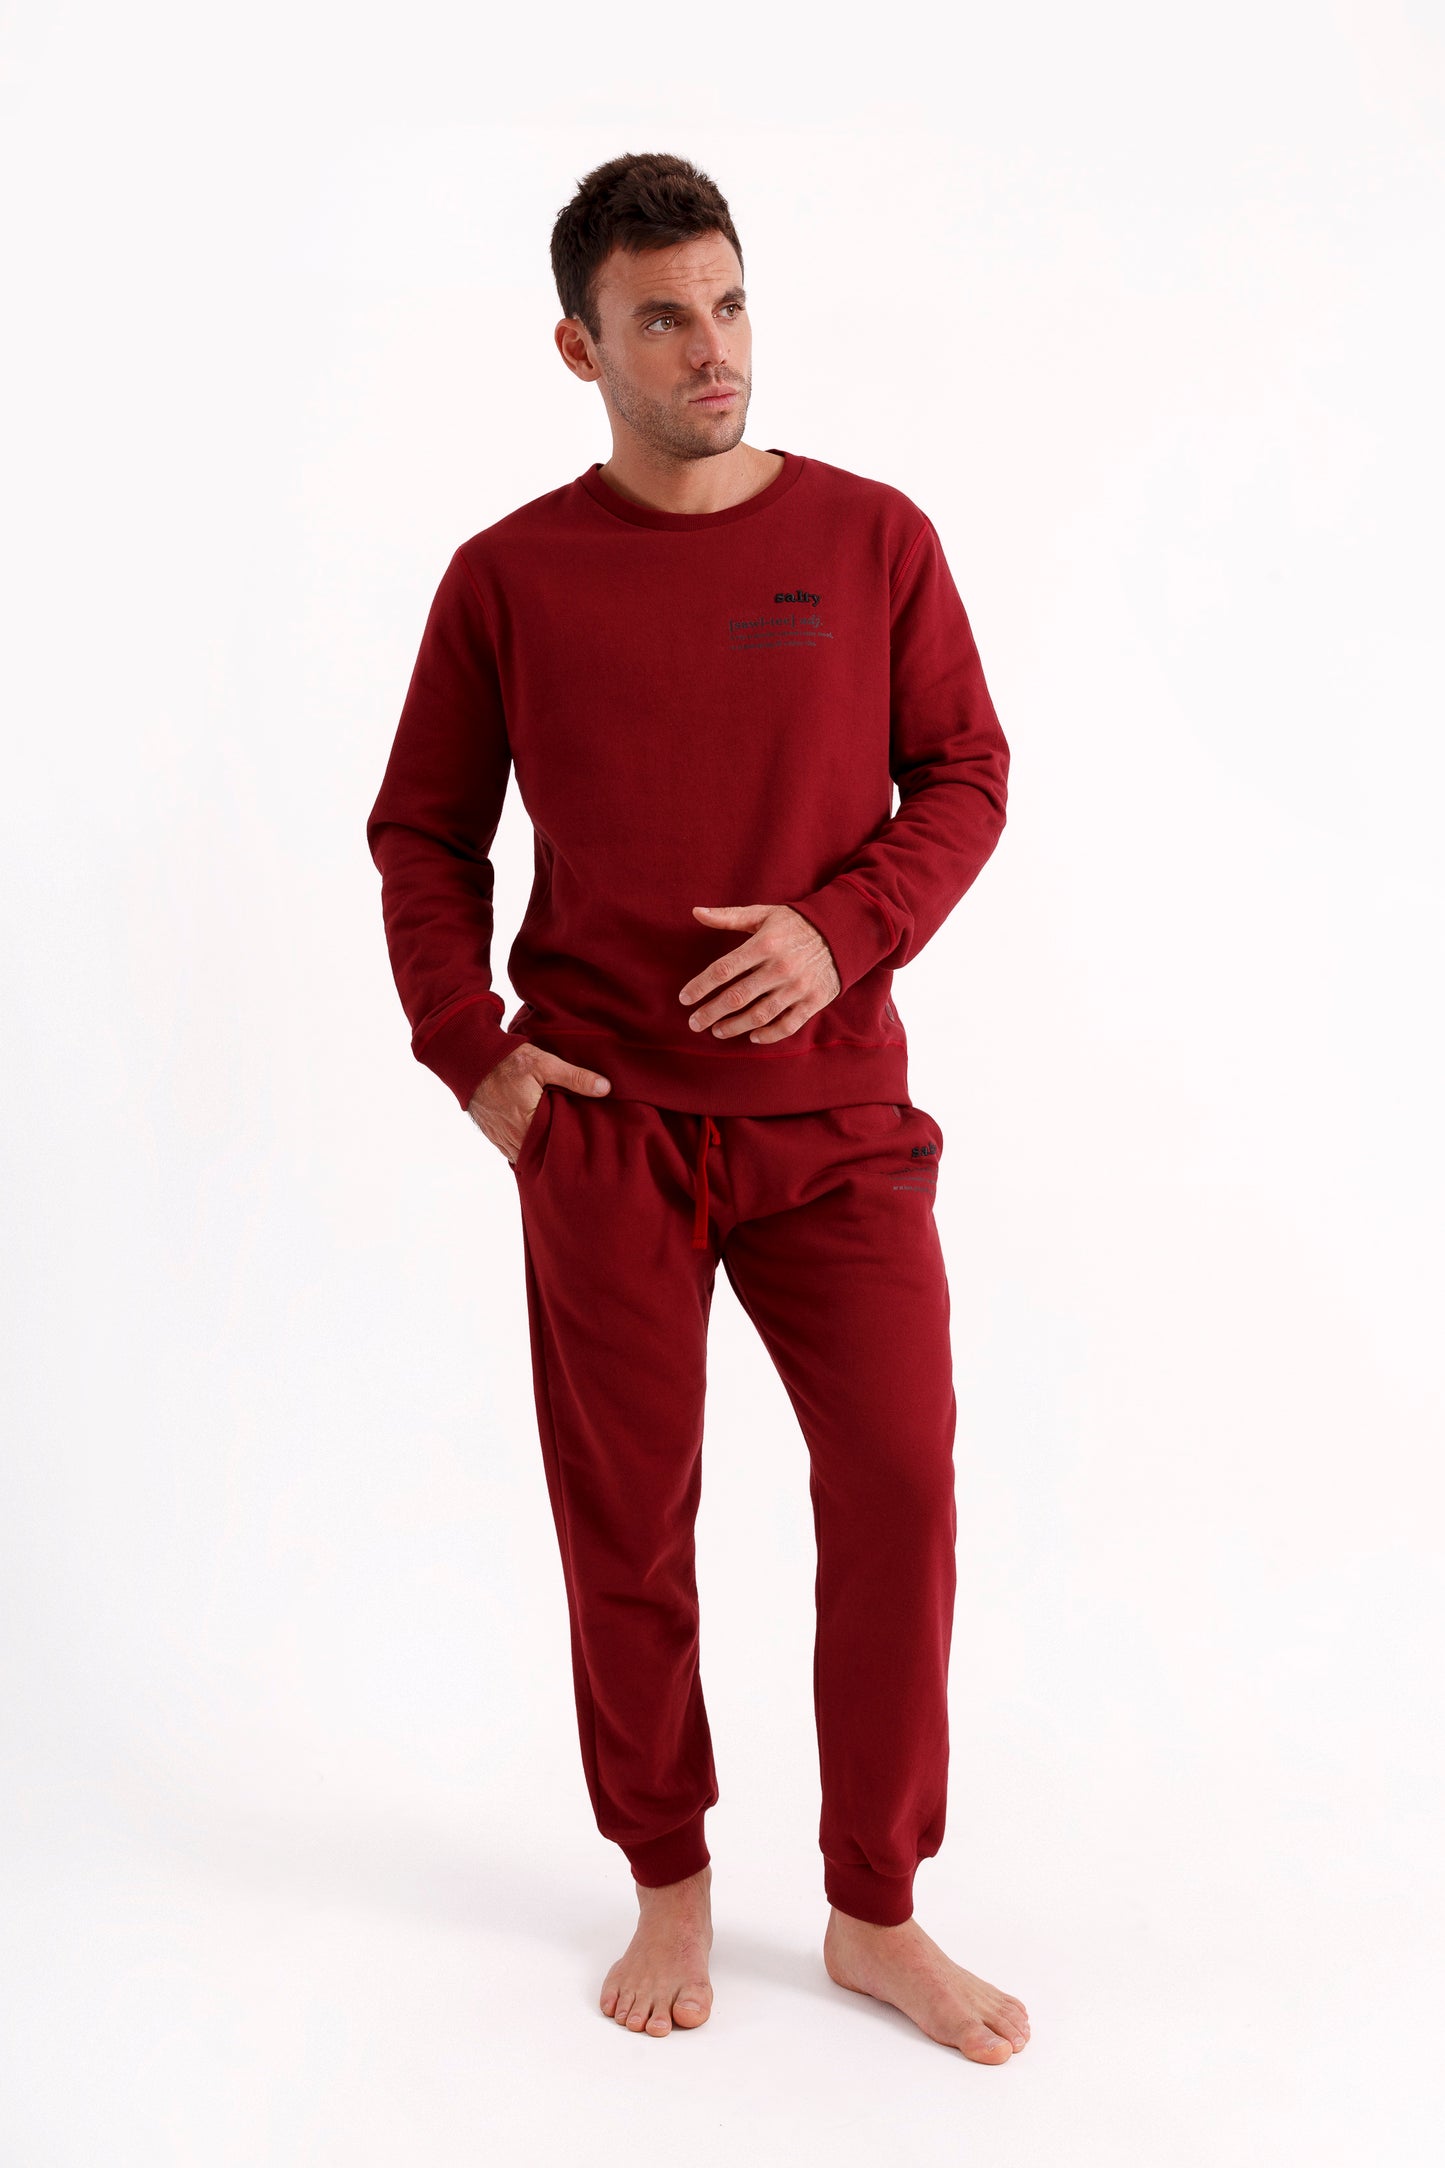 Unisex - Maroon Sweatshirt